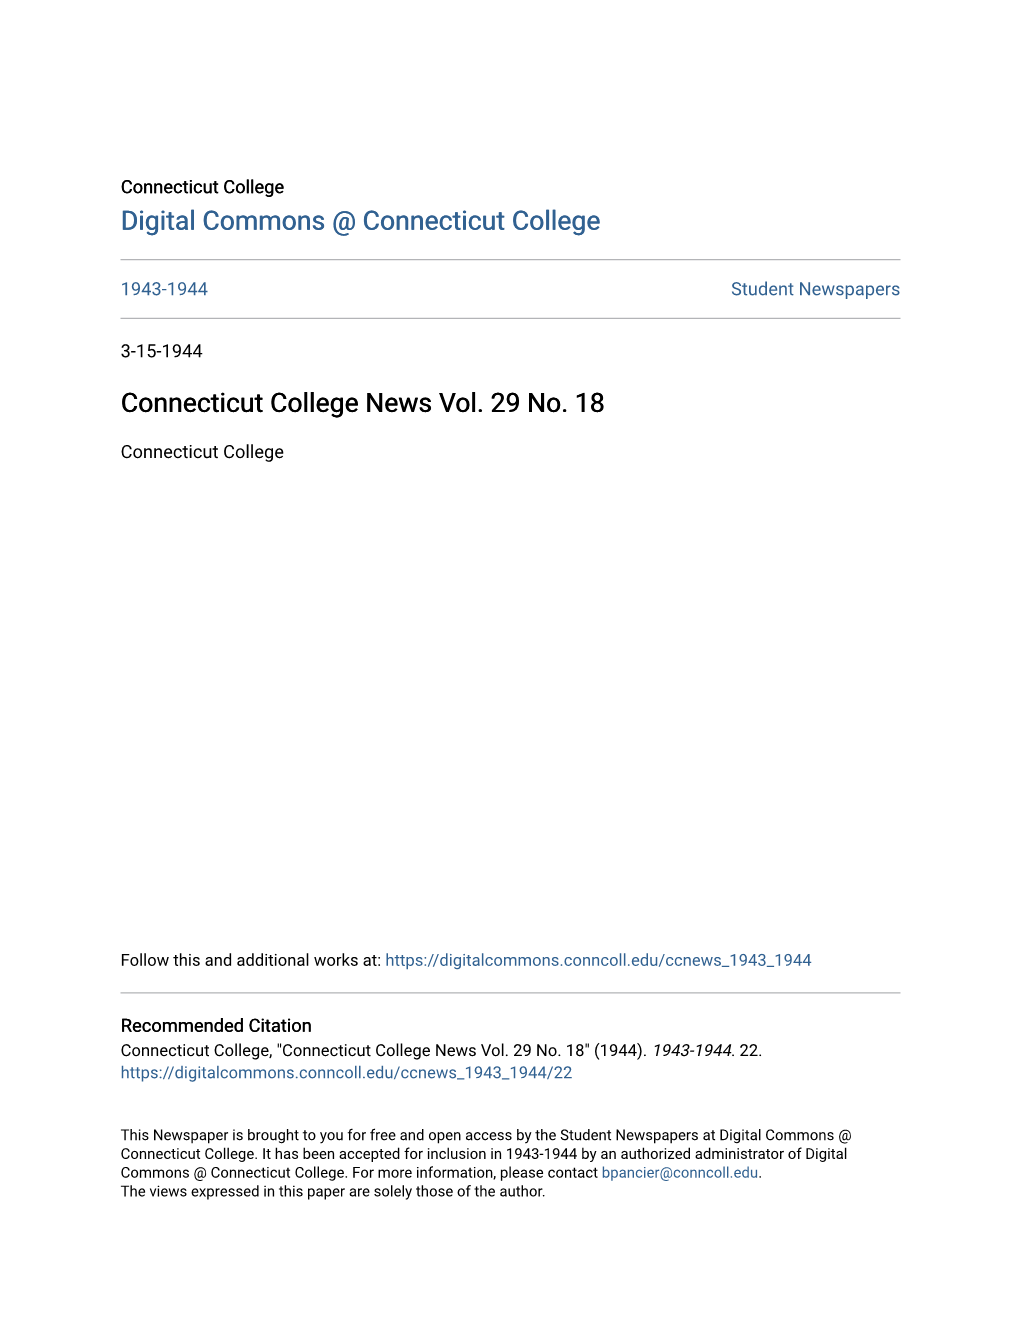 Connecticut College News Vol. 29 No. 18